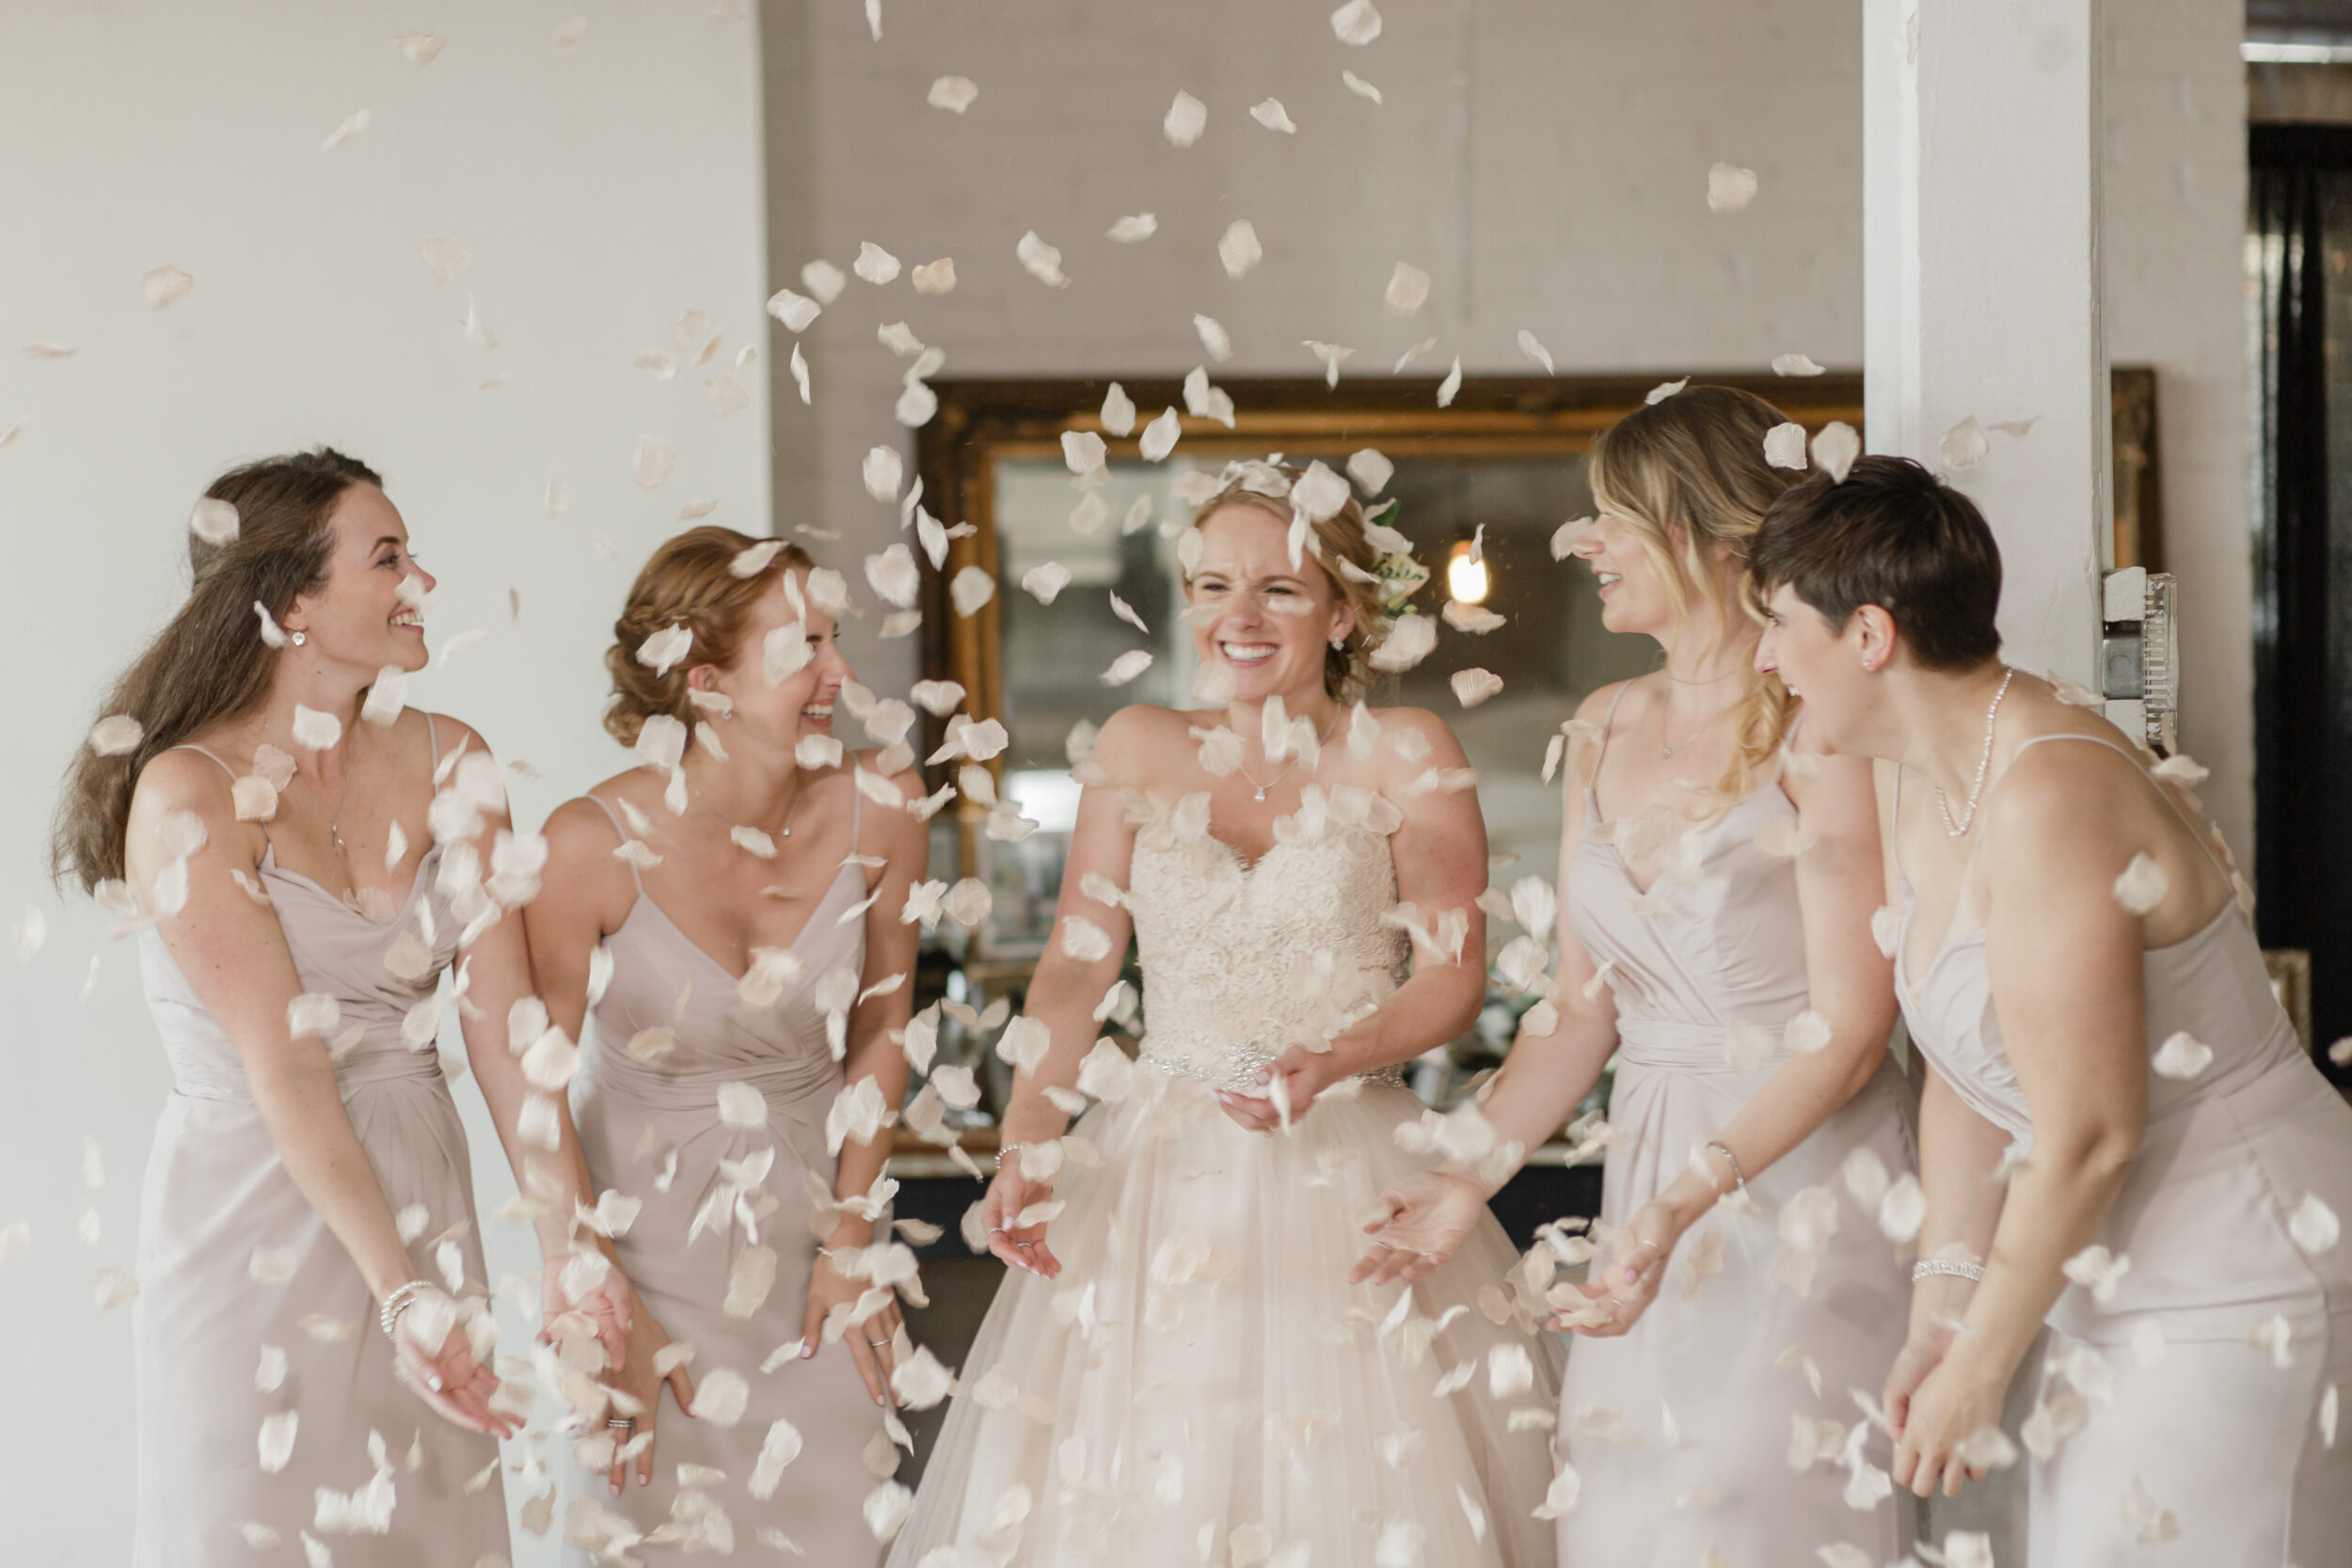 Bridesmaids toss flower petals as a bride enters a white room. 